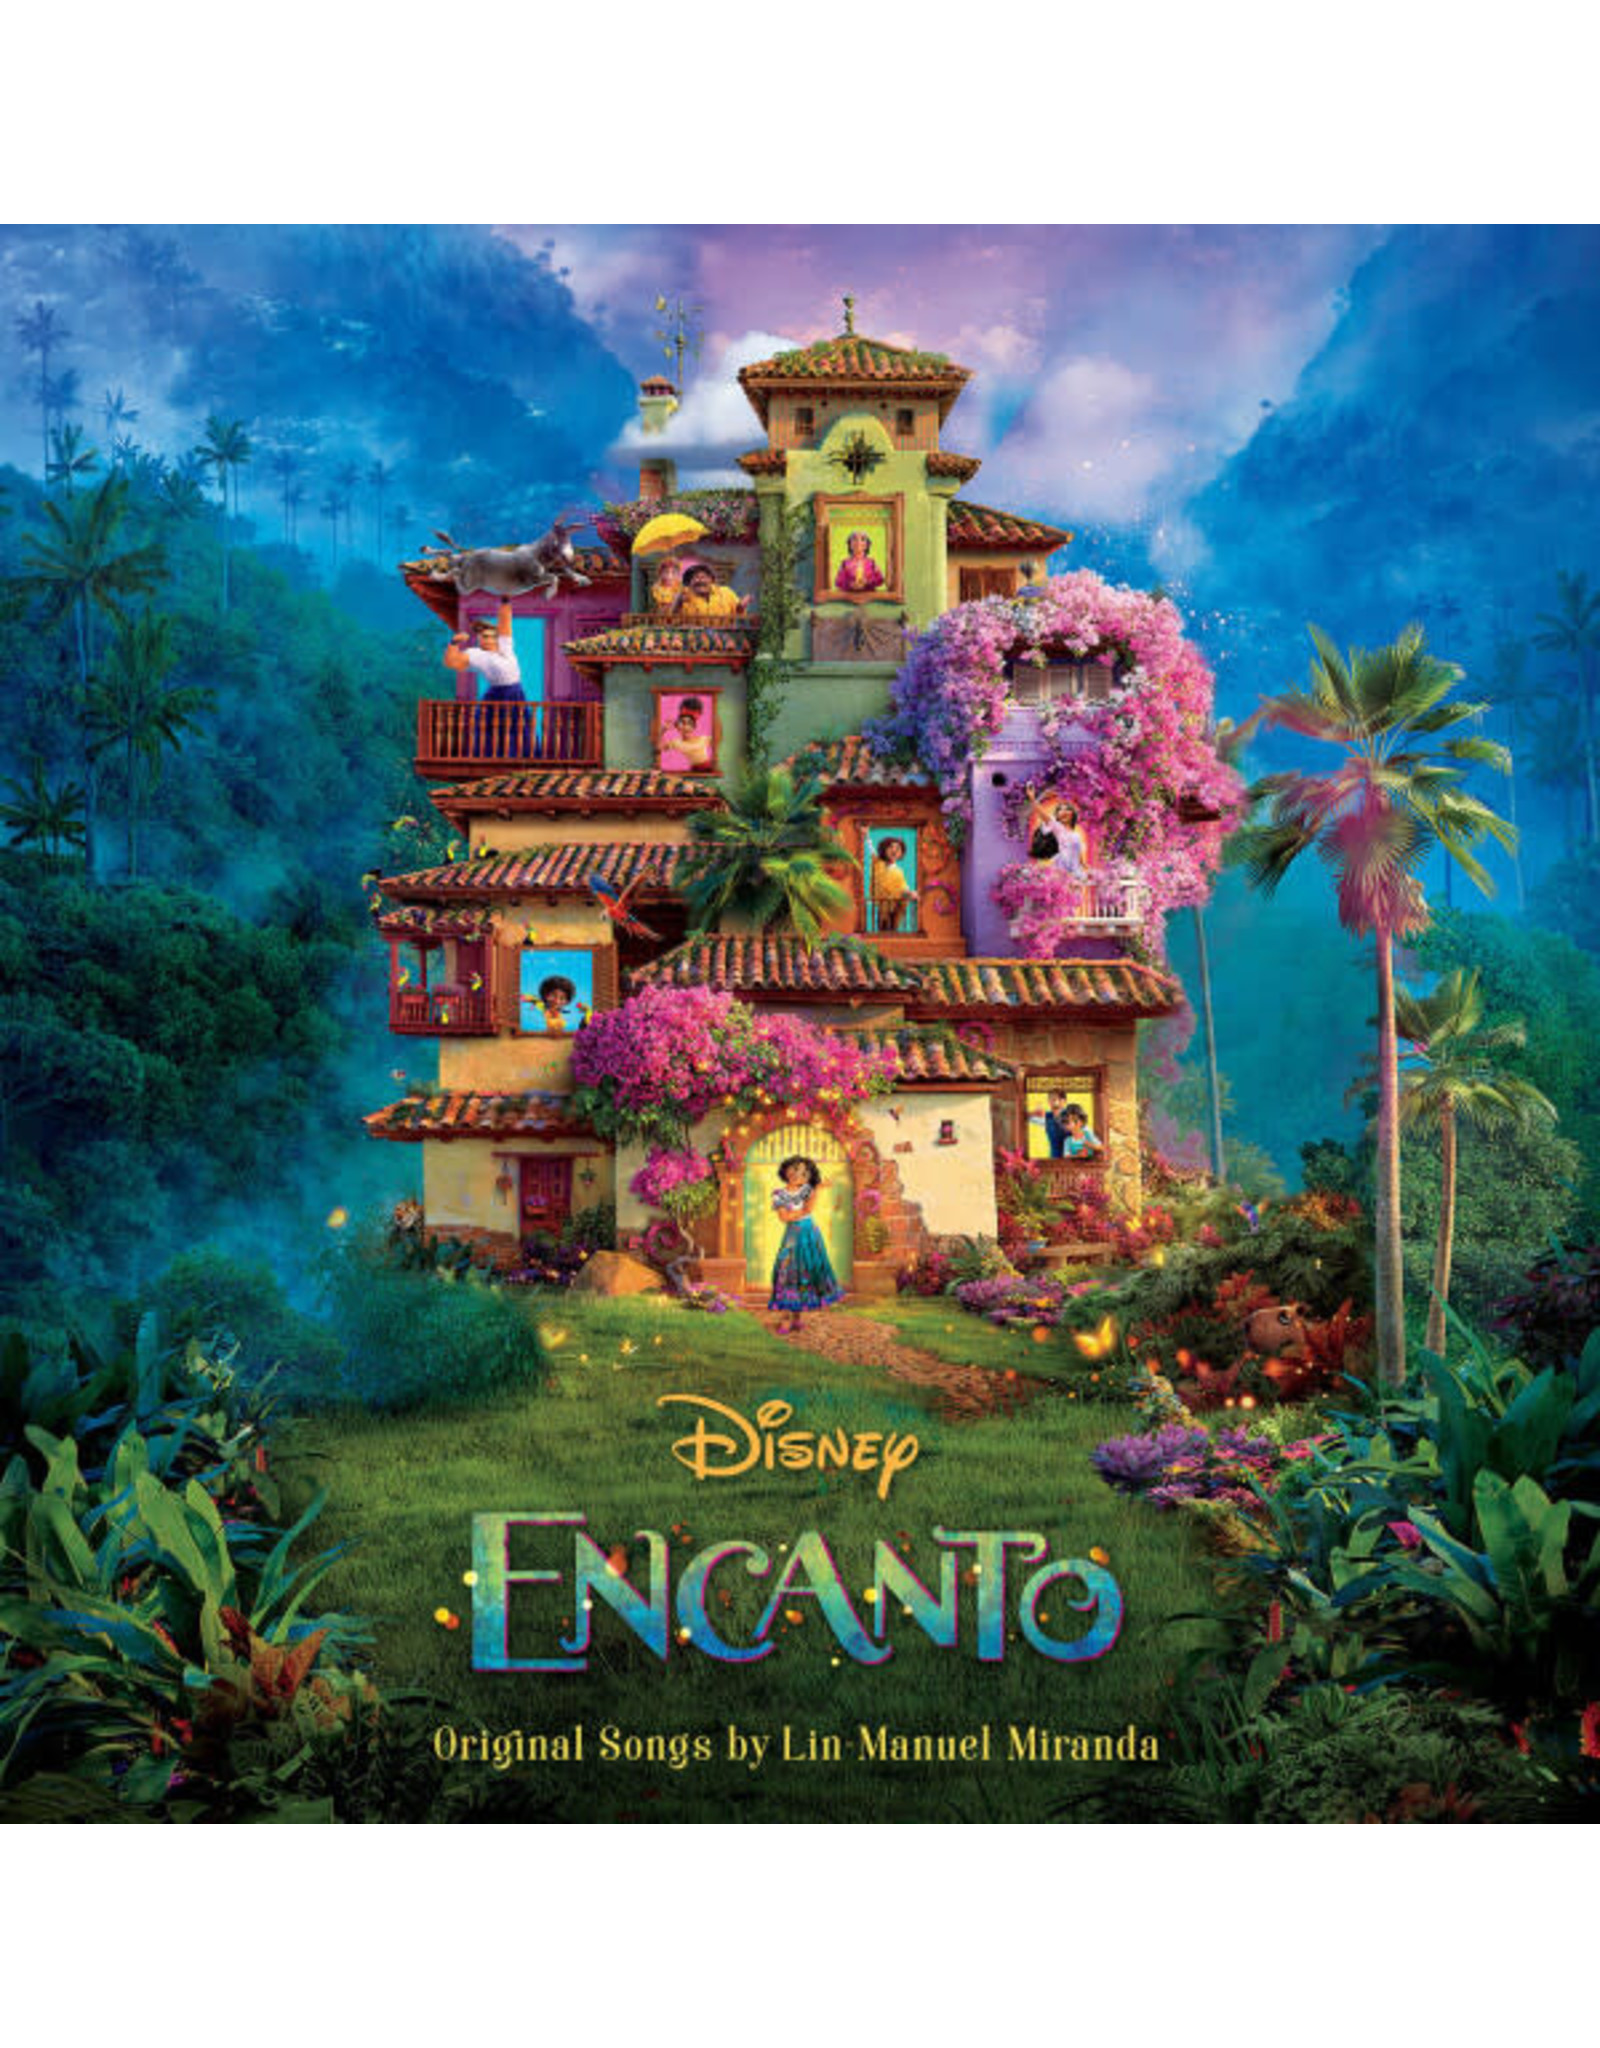 Disney - Encanto (Music From The Film)